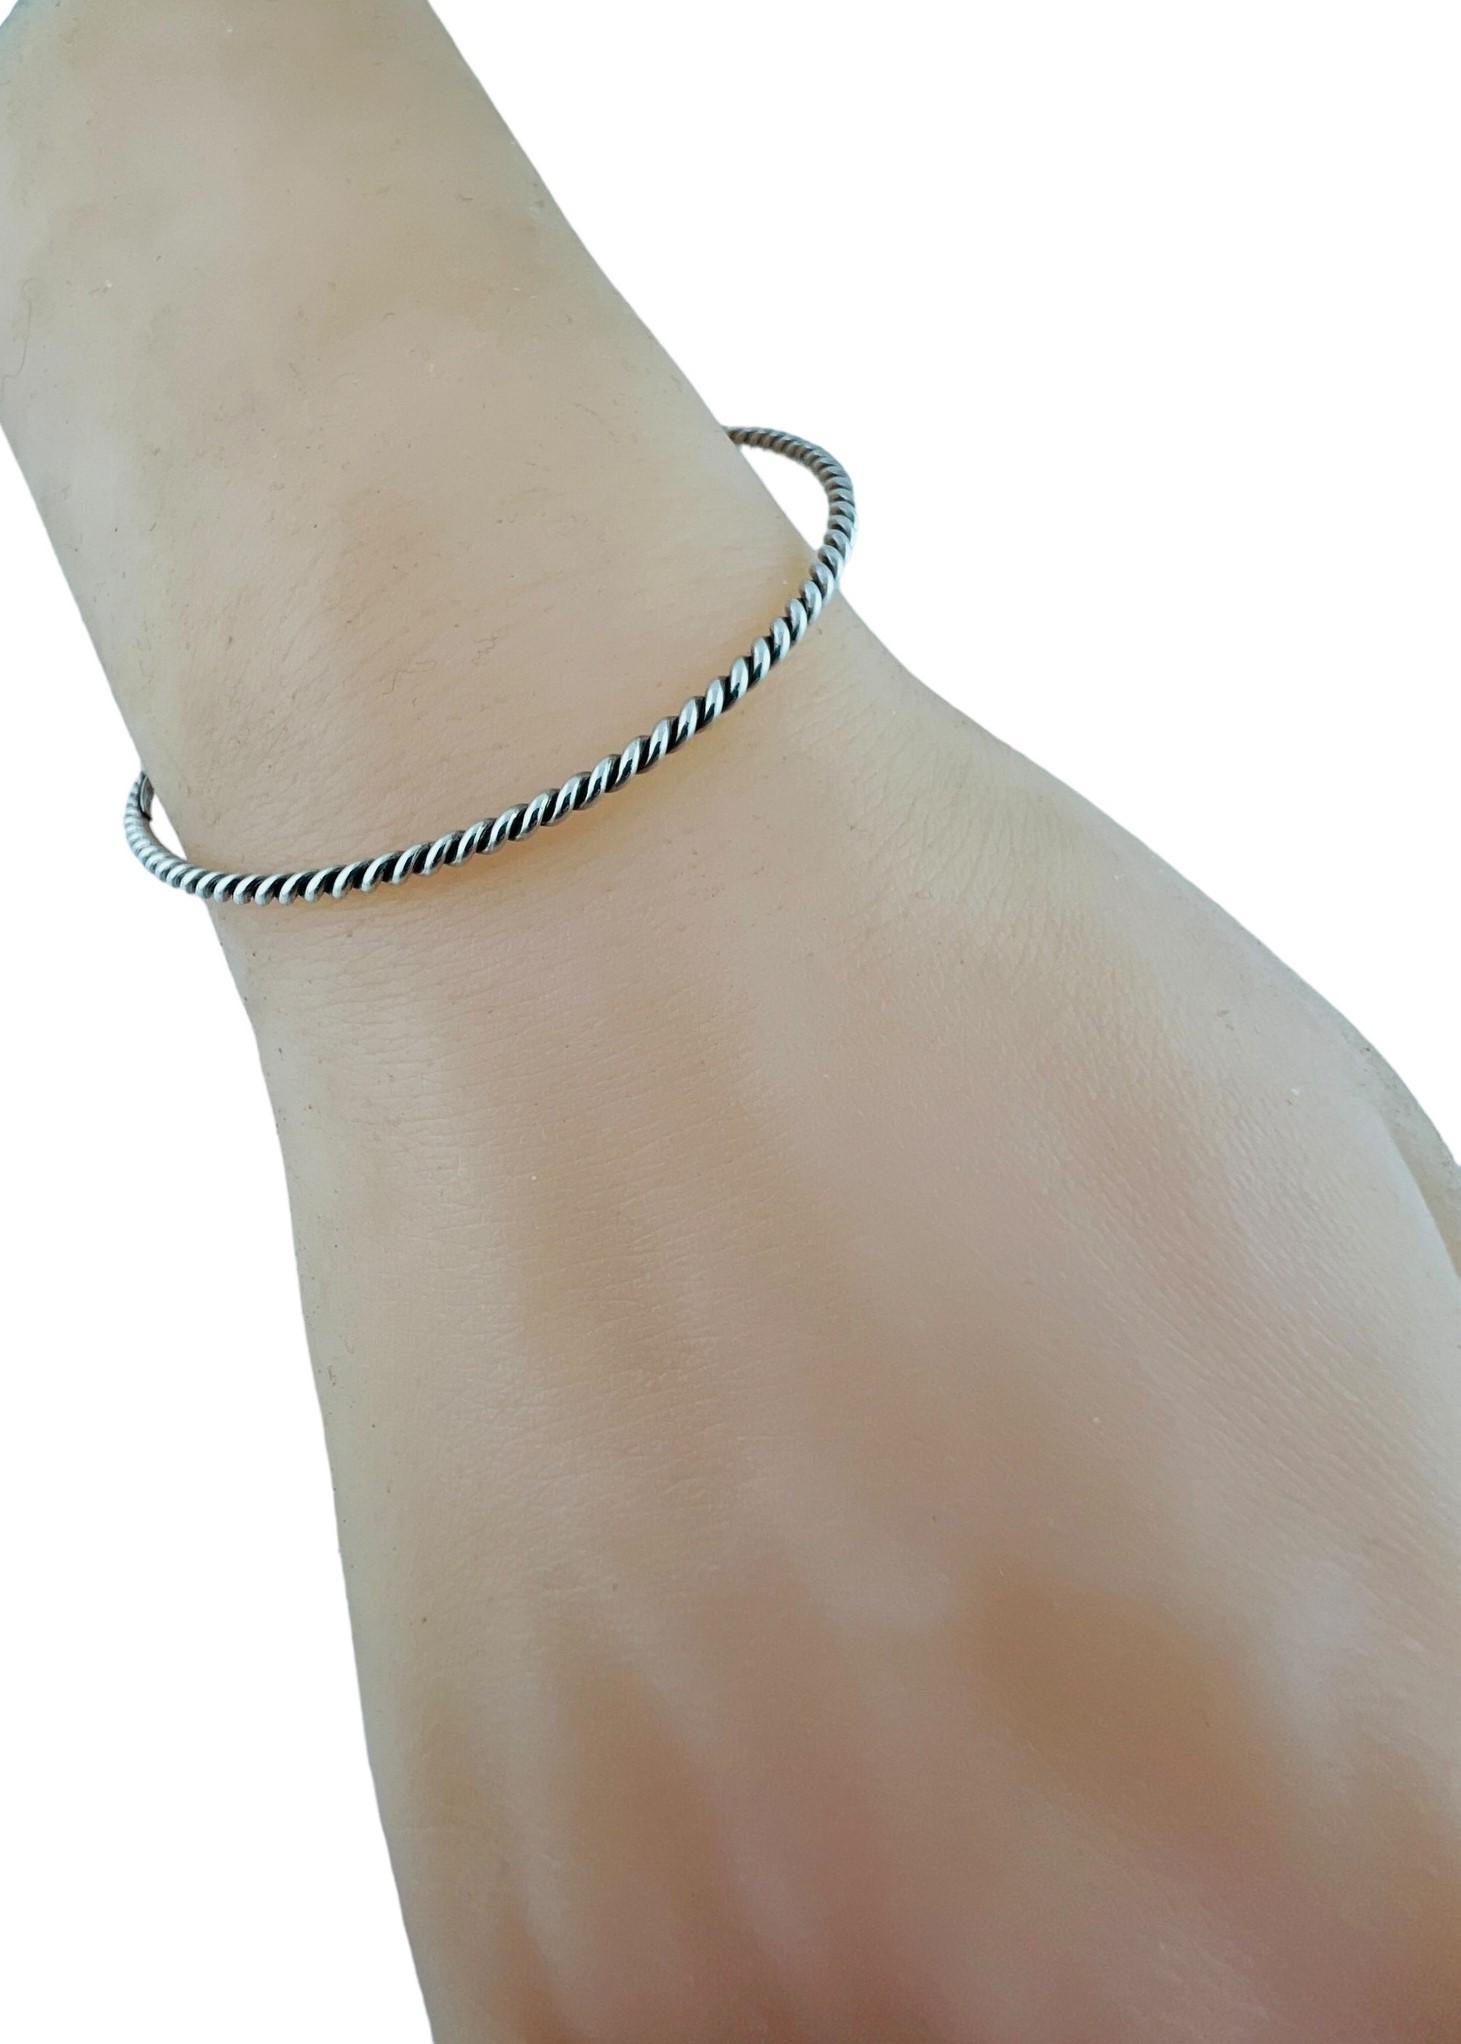 Tiffany & Co. Sterling Silver Twisted Bangle Bracelet #16551 1